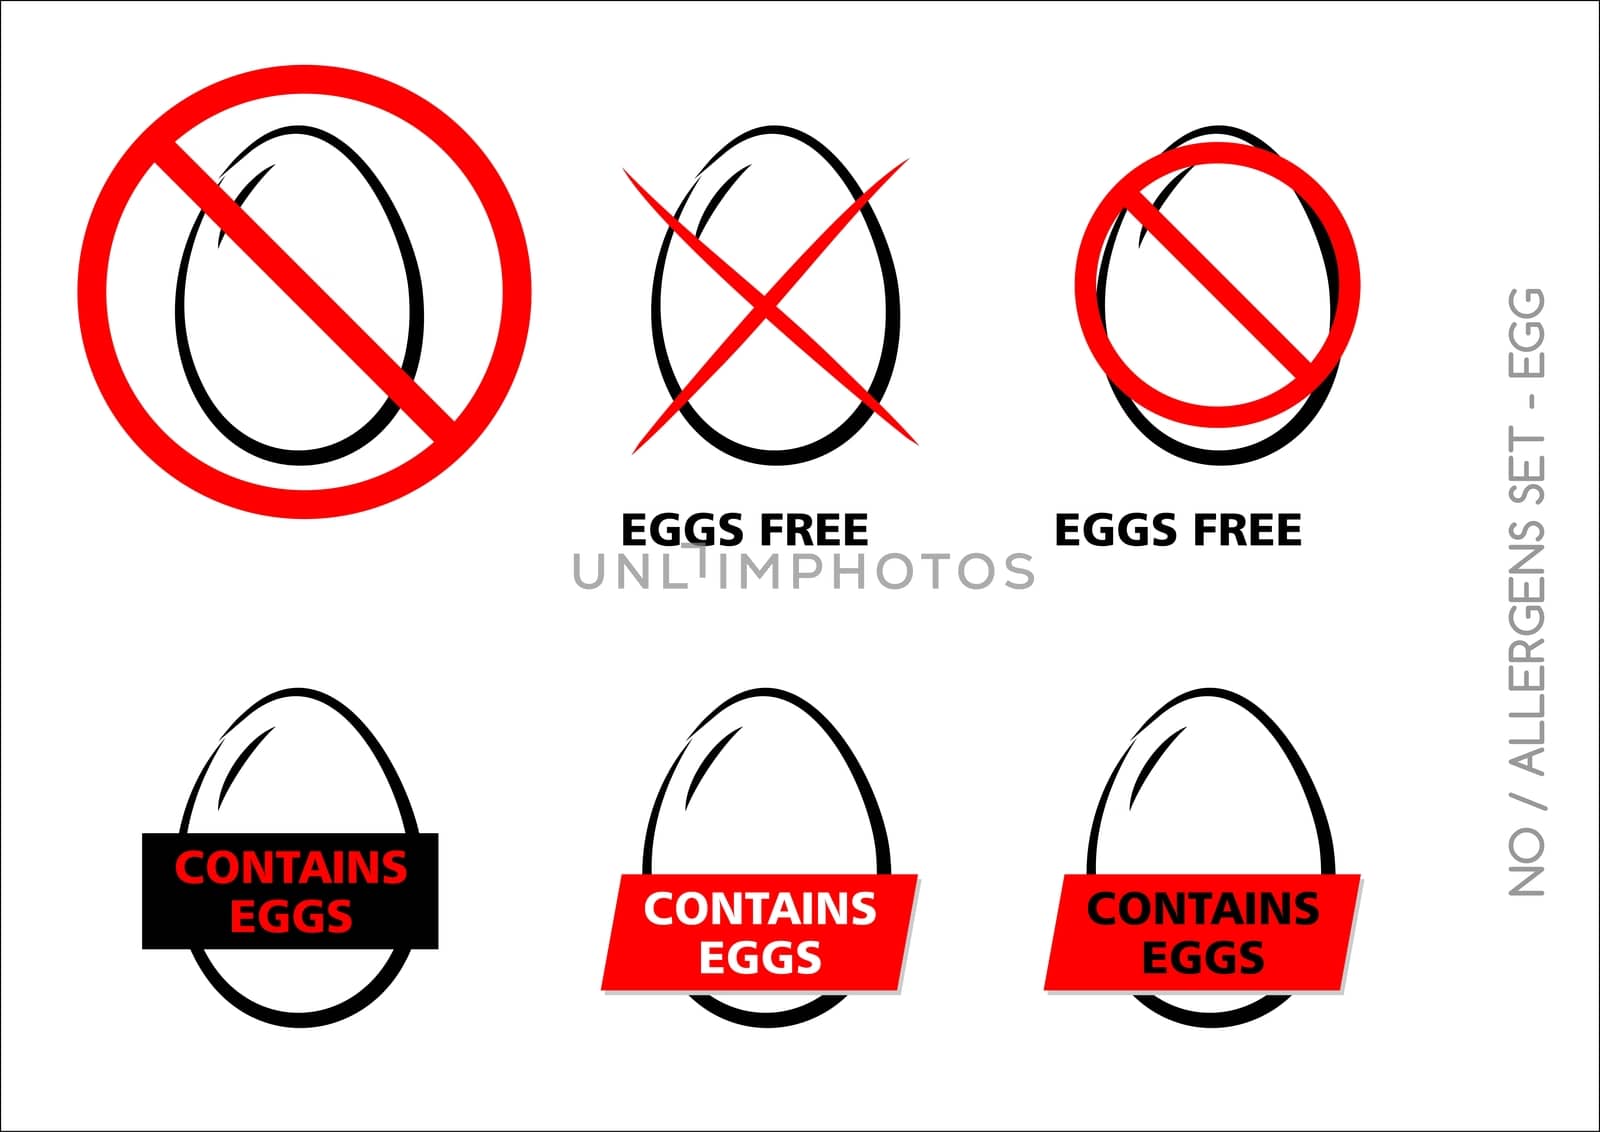 Eggs Free Symbols on white background